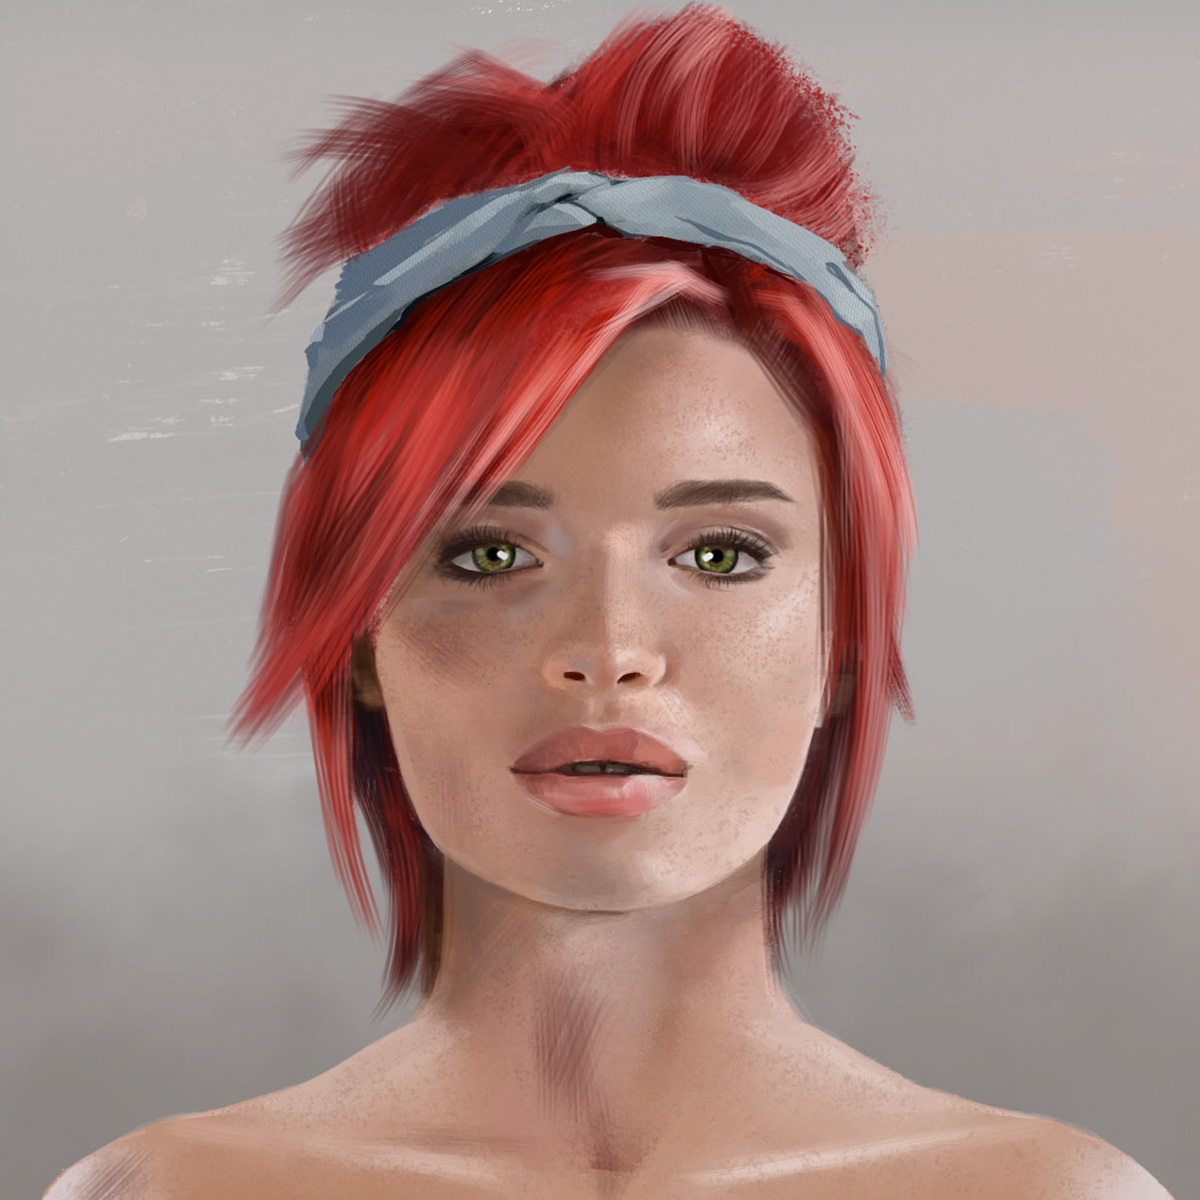 Mechanic girl redhead